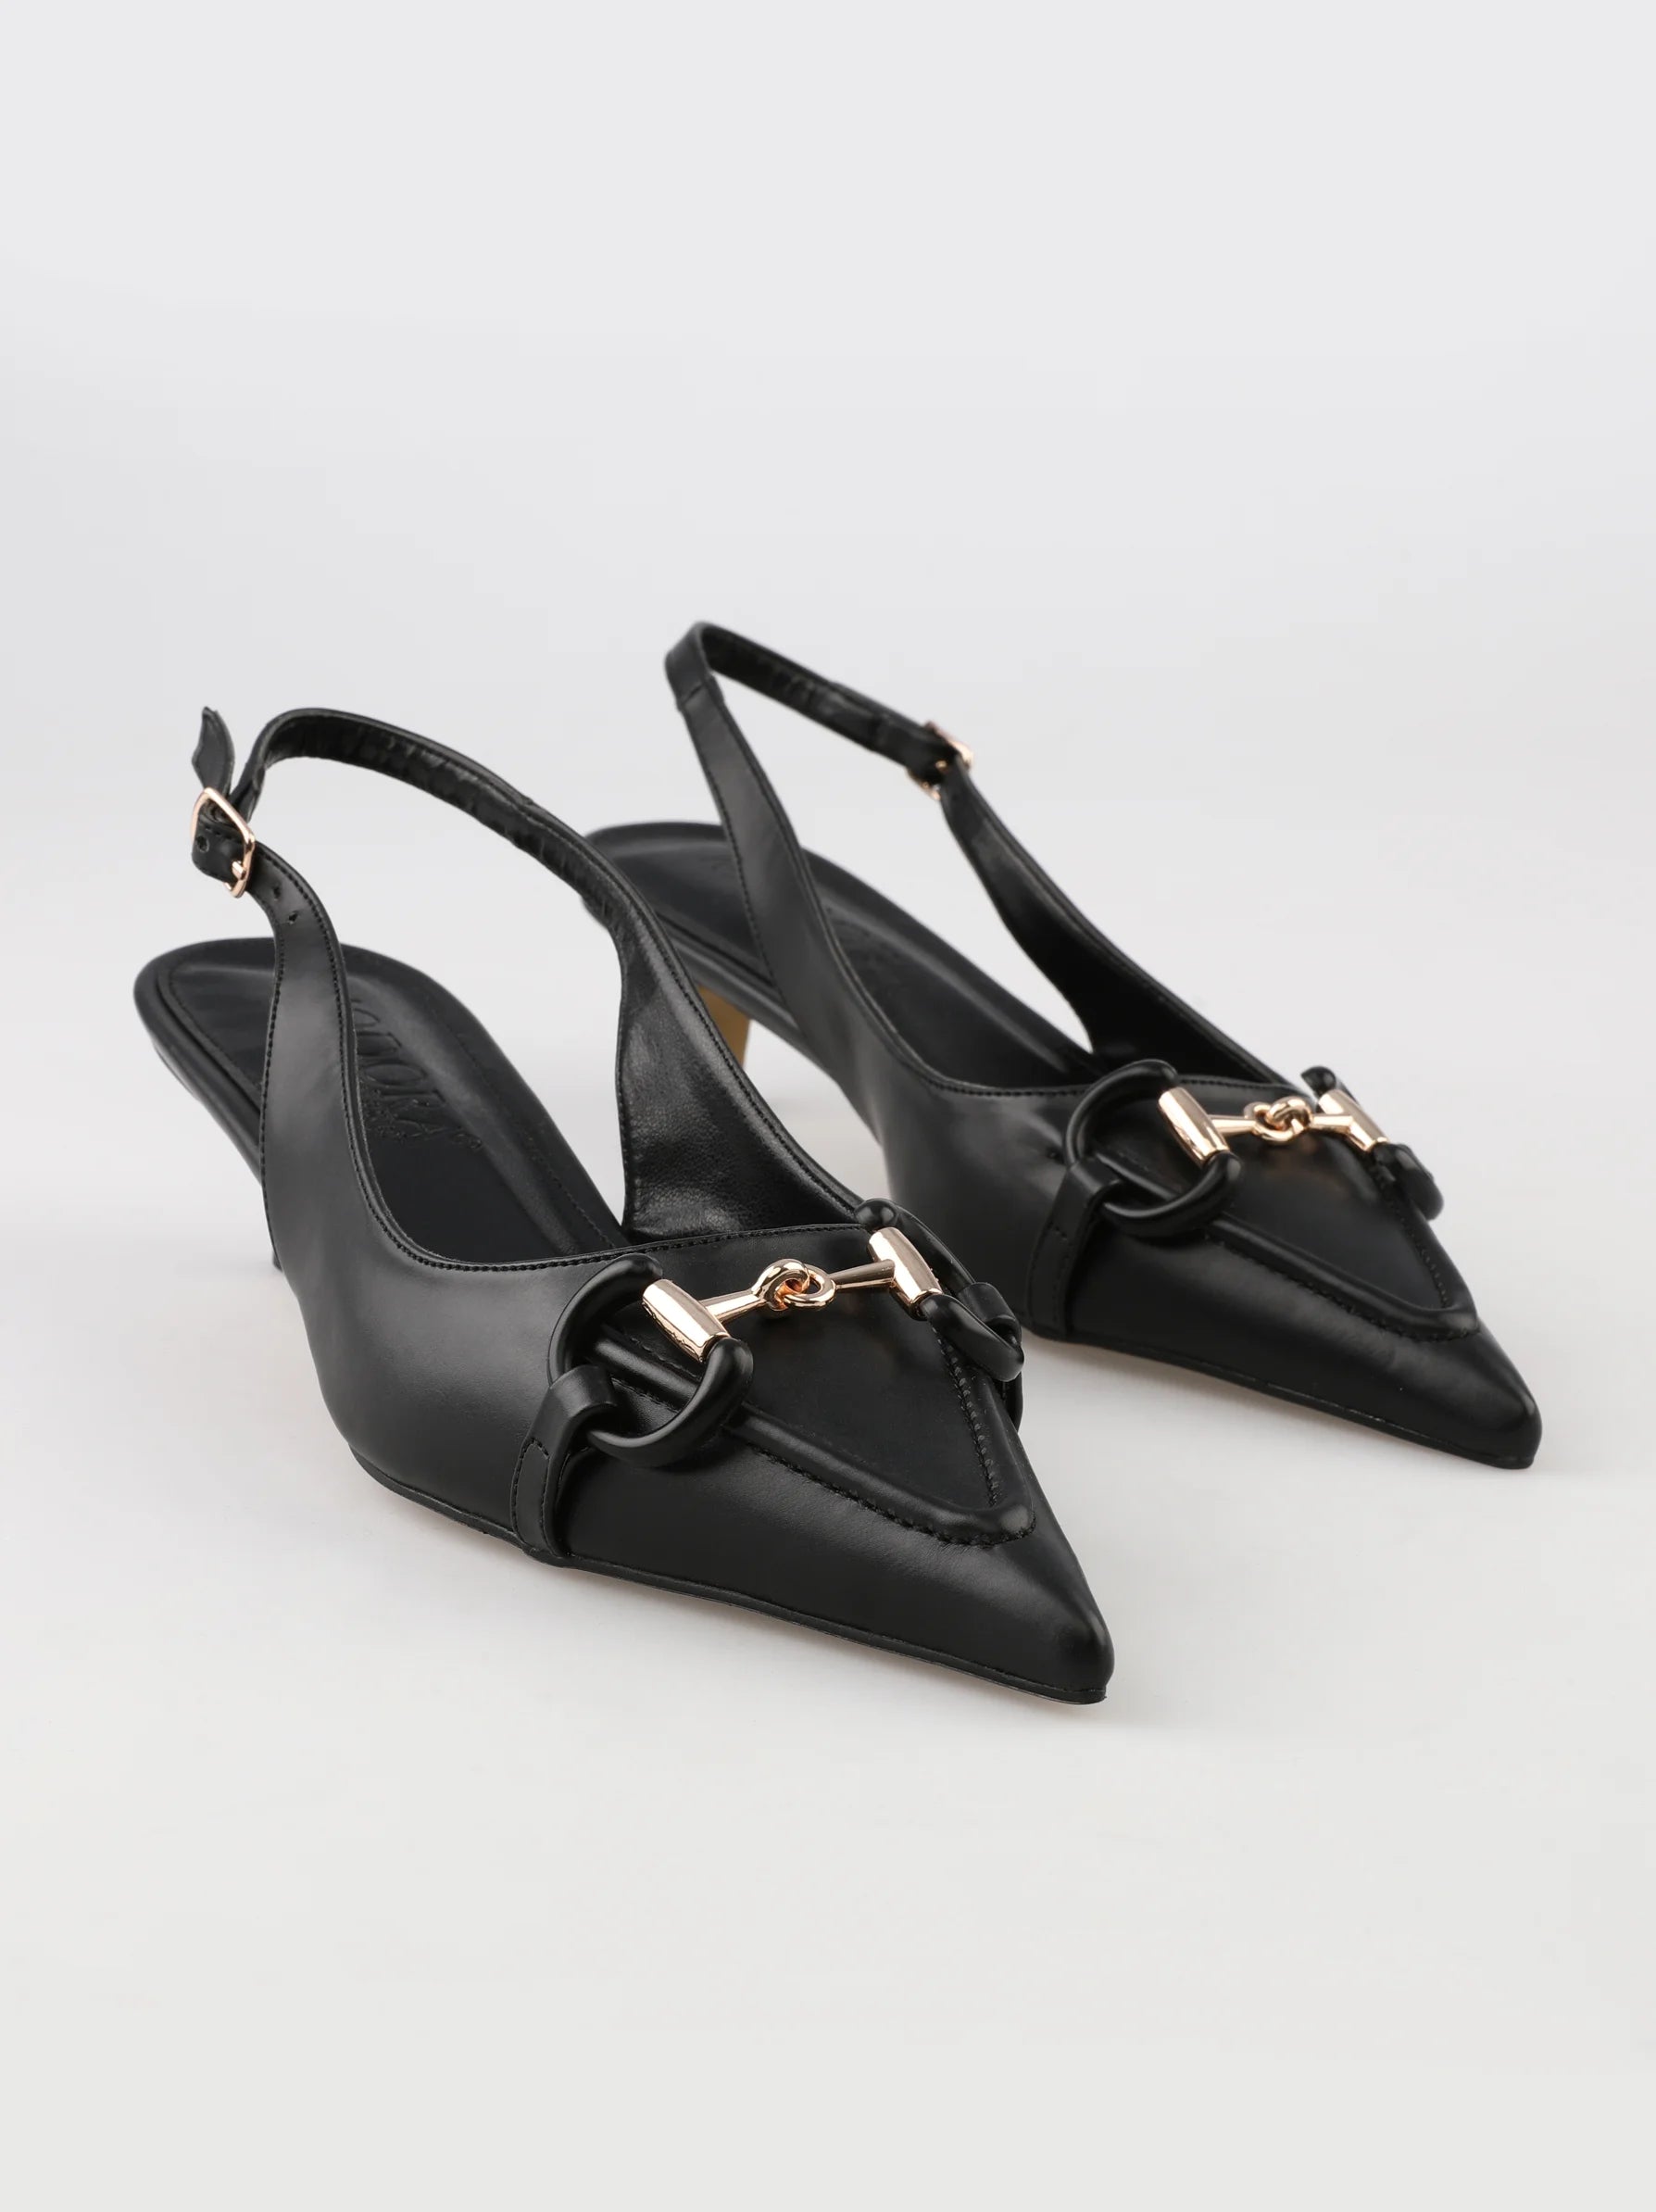 Chloé Strap Heels for Women | Mercari